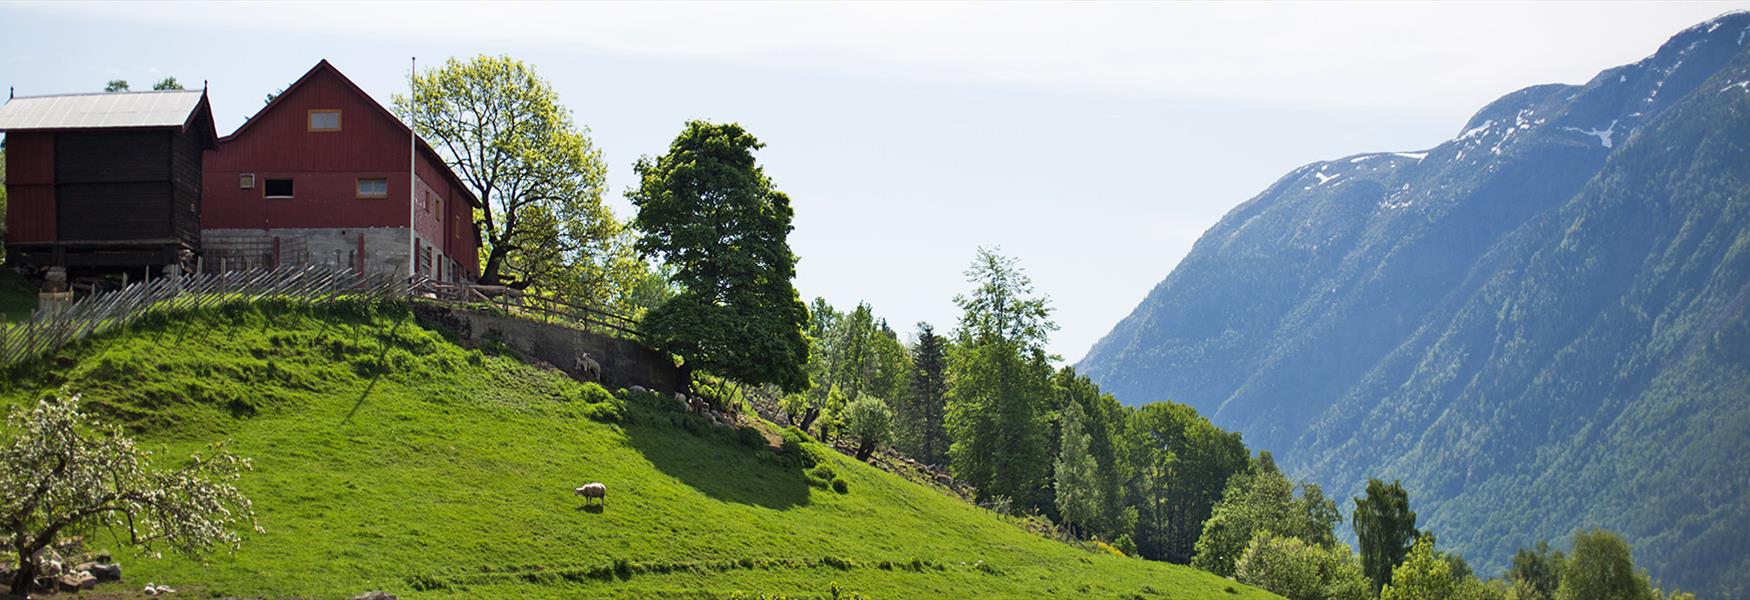 Rørtveit gård i Seljord